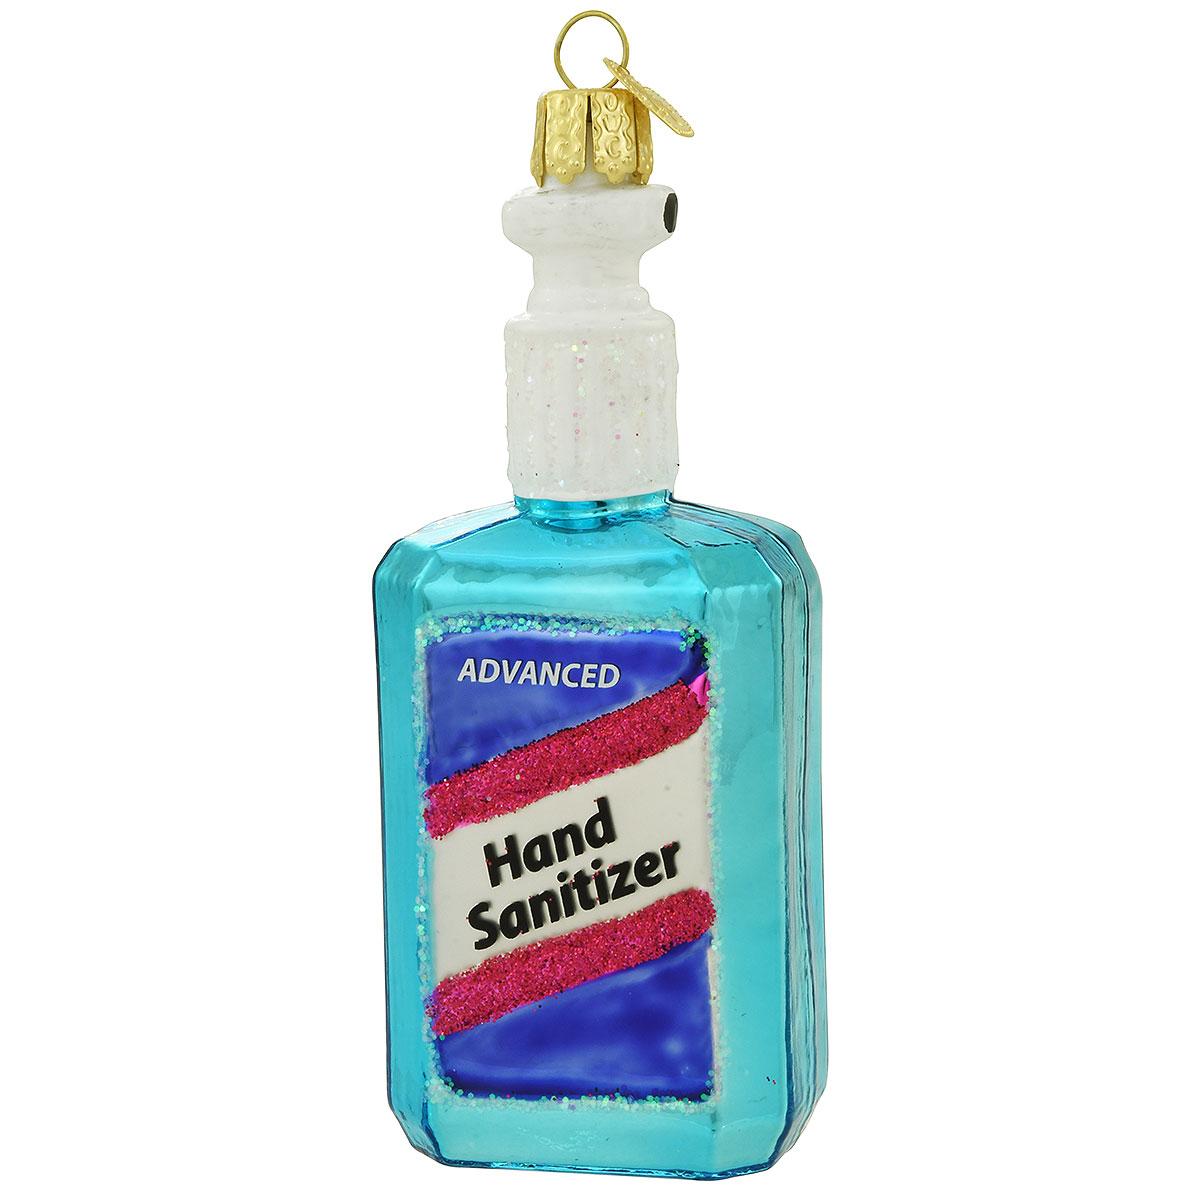 Hand Sanitizer Glass Ornament